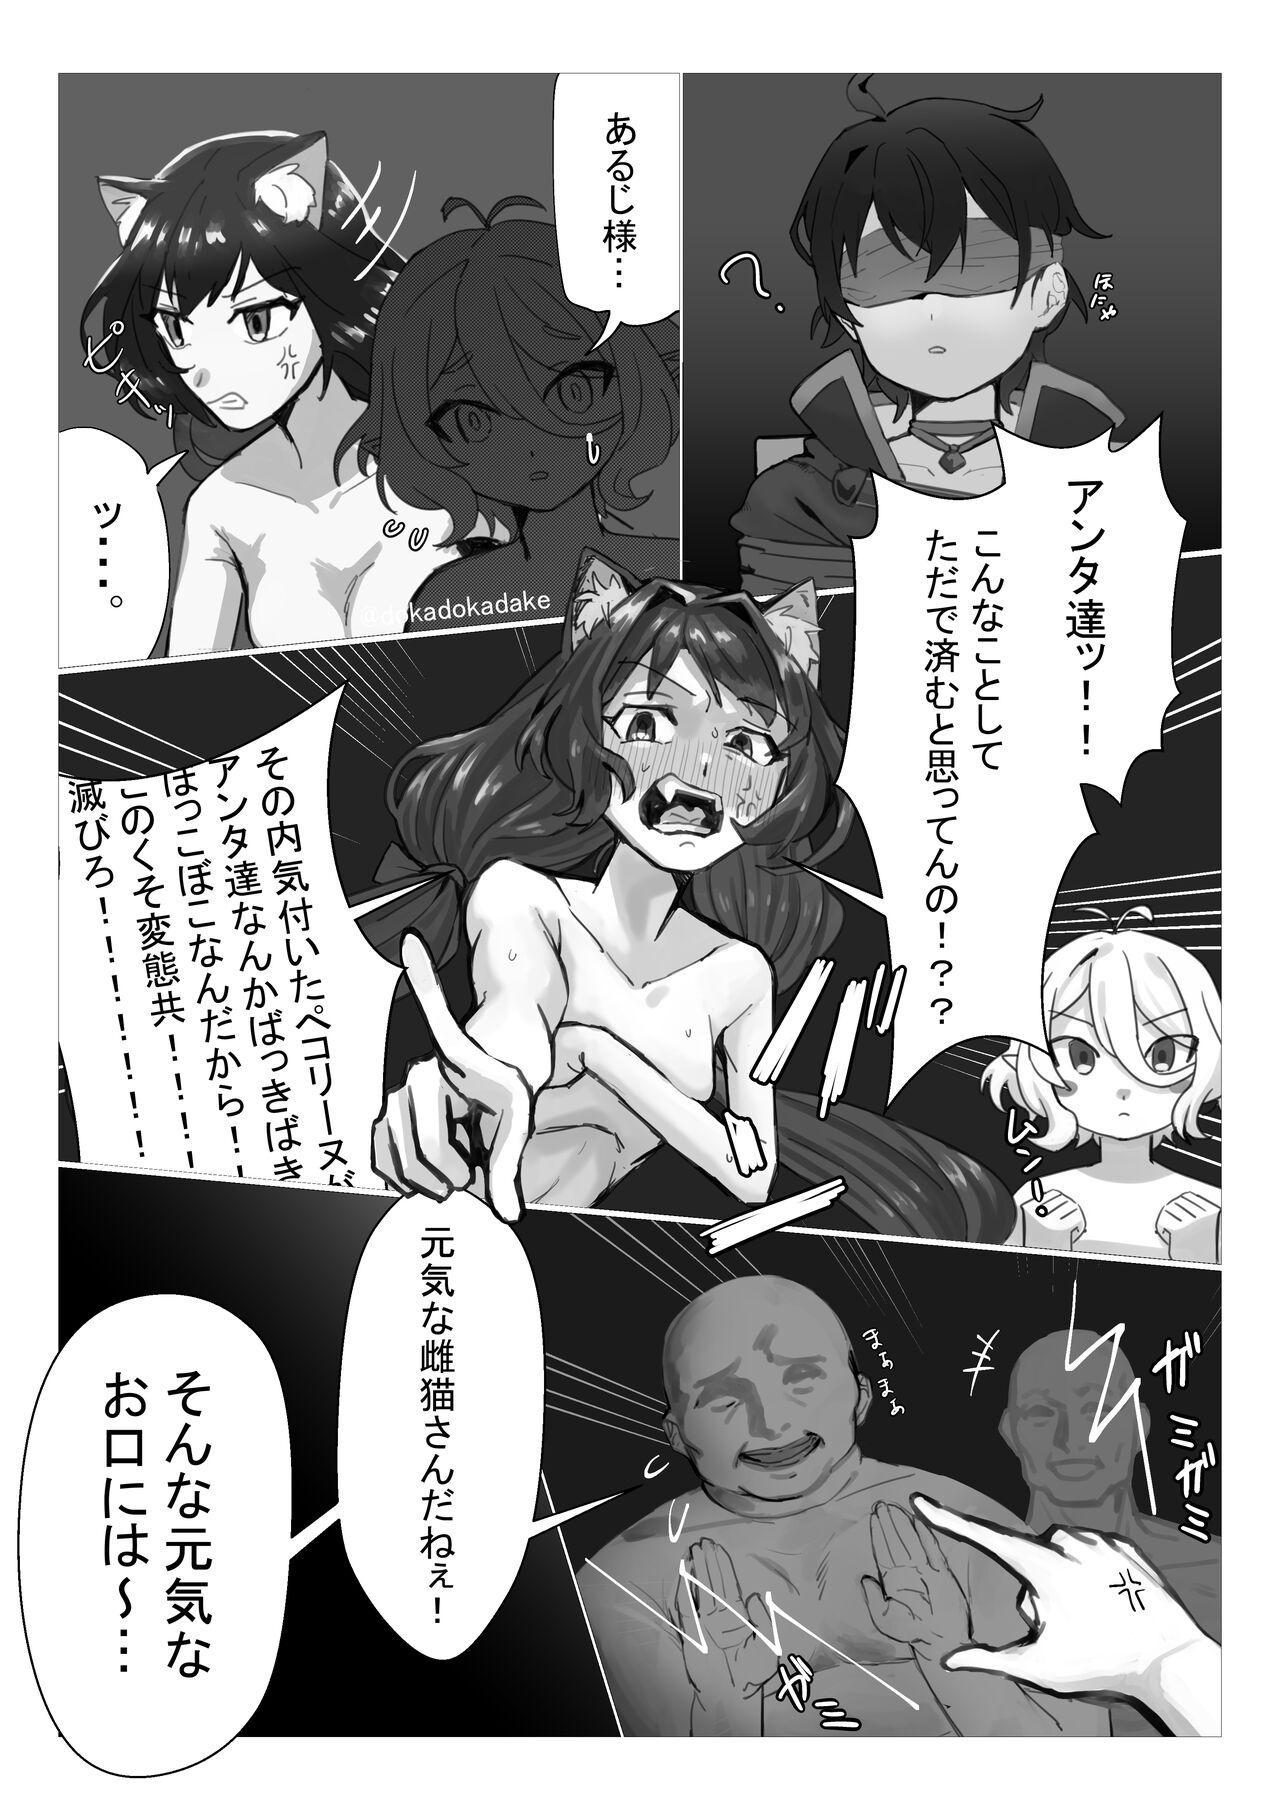 Work プリコネ輪姦NTR漫画 - Princess connect Chudai - Picture 2